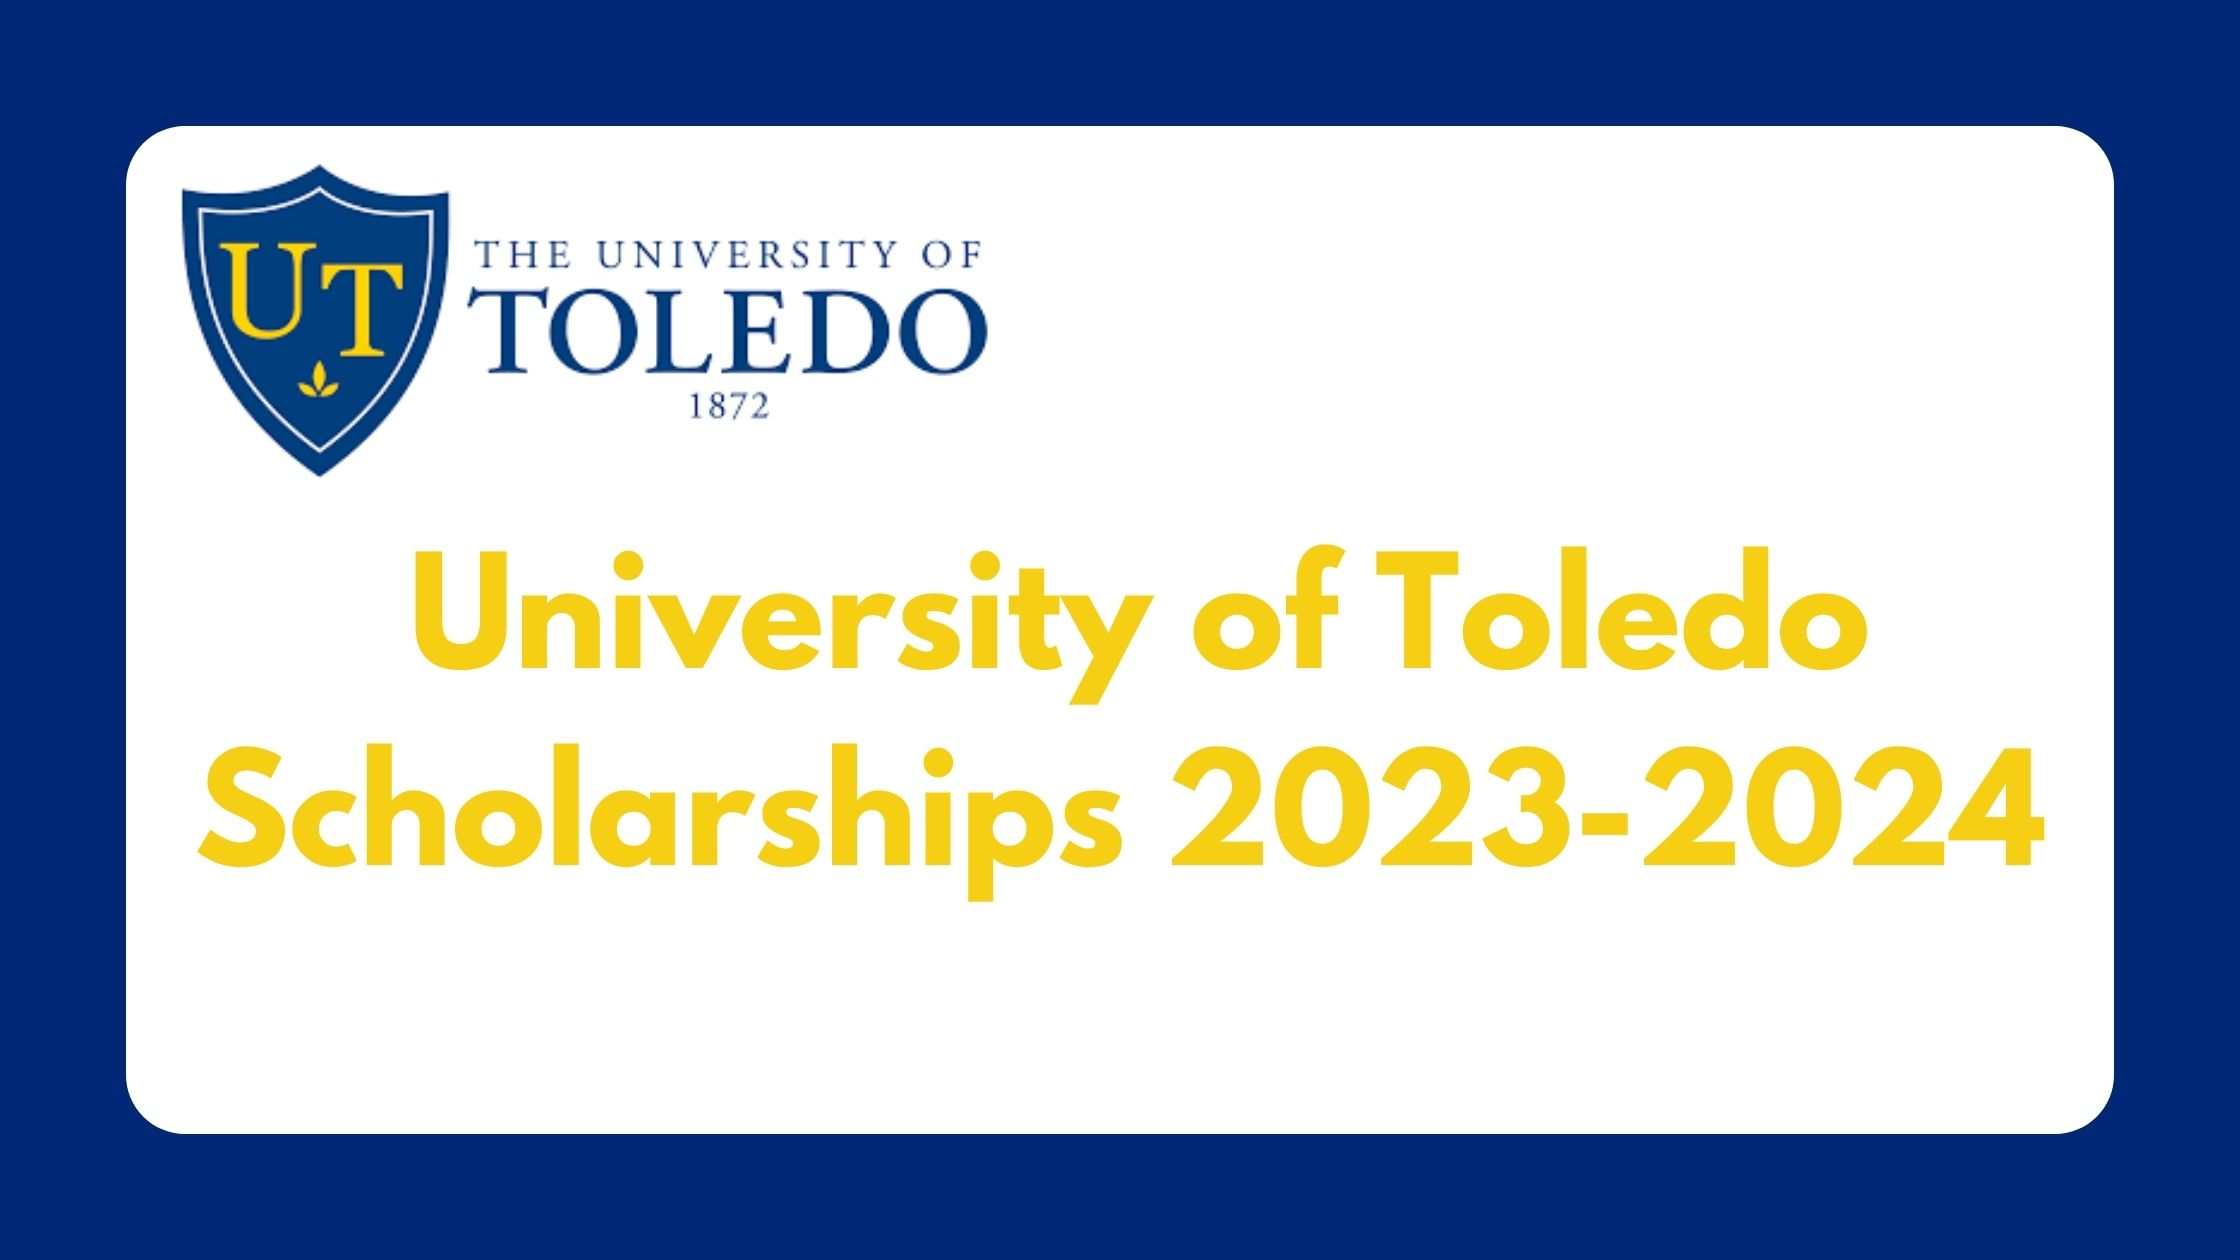 University of Toledo Scholarships 2023-2024